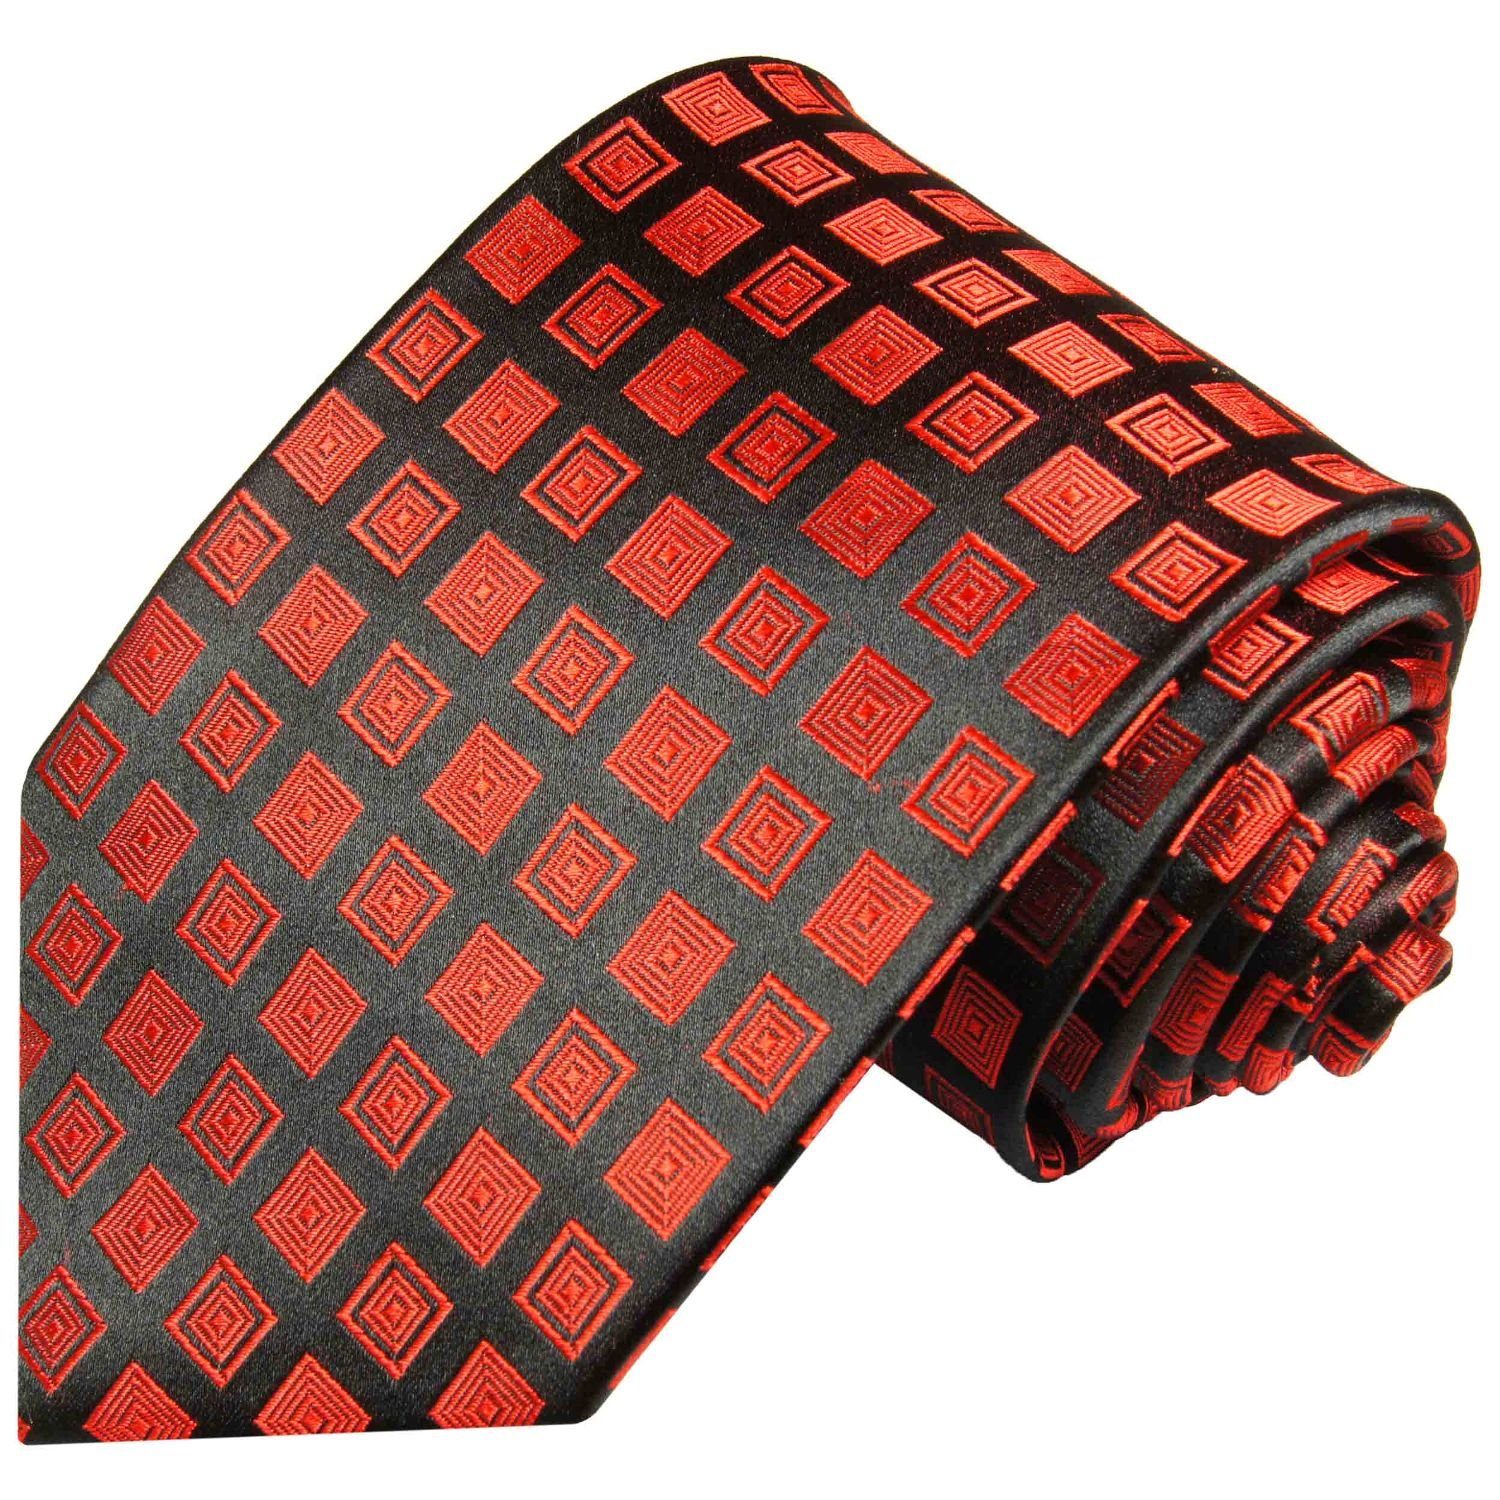 Paul Malone Krawatte Designer Seidenkrawatte Herren Schlips modern kariert 100% Seide Breit (8cm), rot schwarz 764